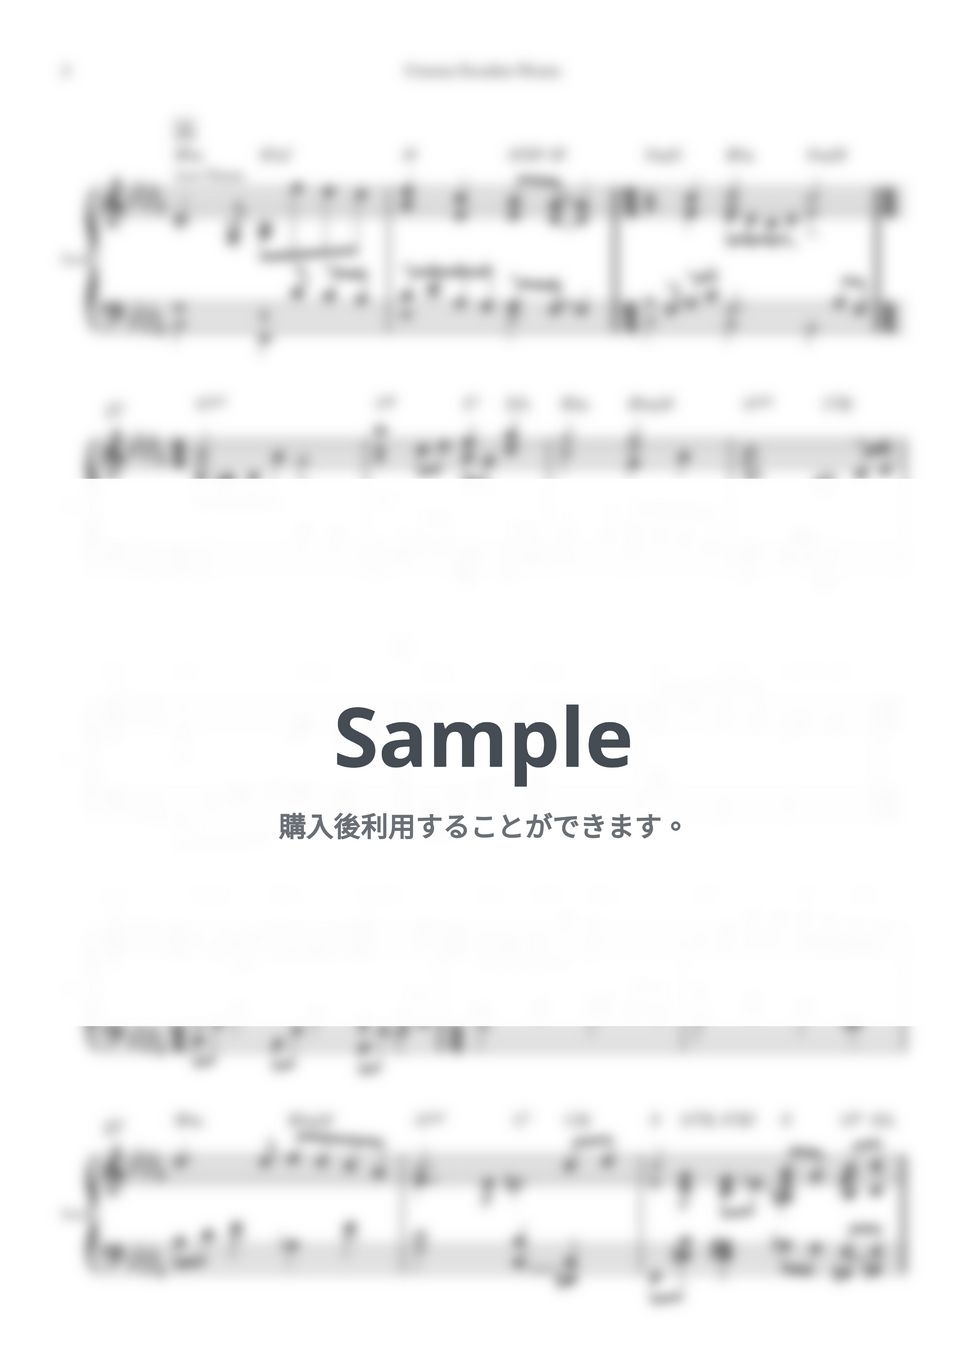 Ennio Morricone - Love theme(Cinema Paradiso OST) (ピアノソロ用楽譜) by Piano QQQ